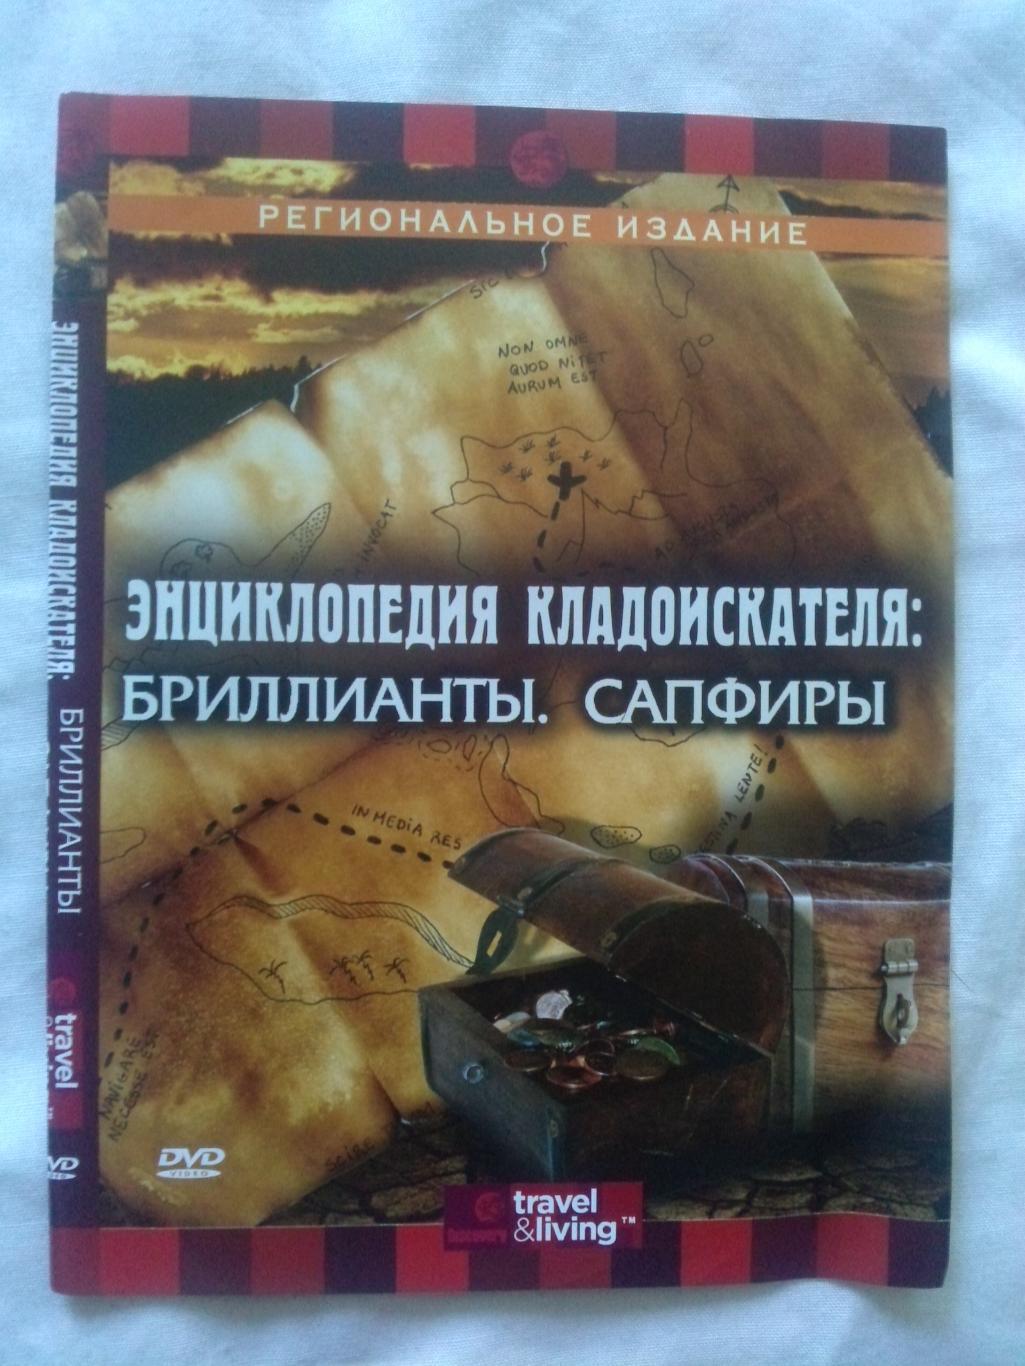 DVD Discovery Кладоискатели : Бриллианты и сапфиры (археология) лицензия